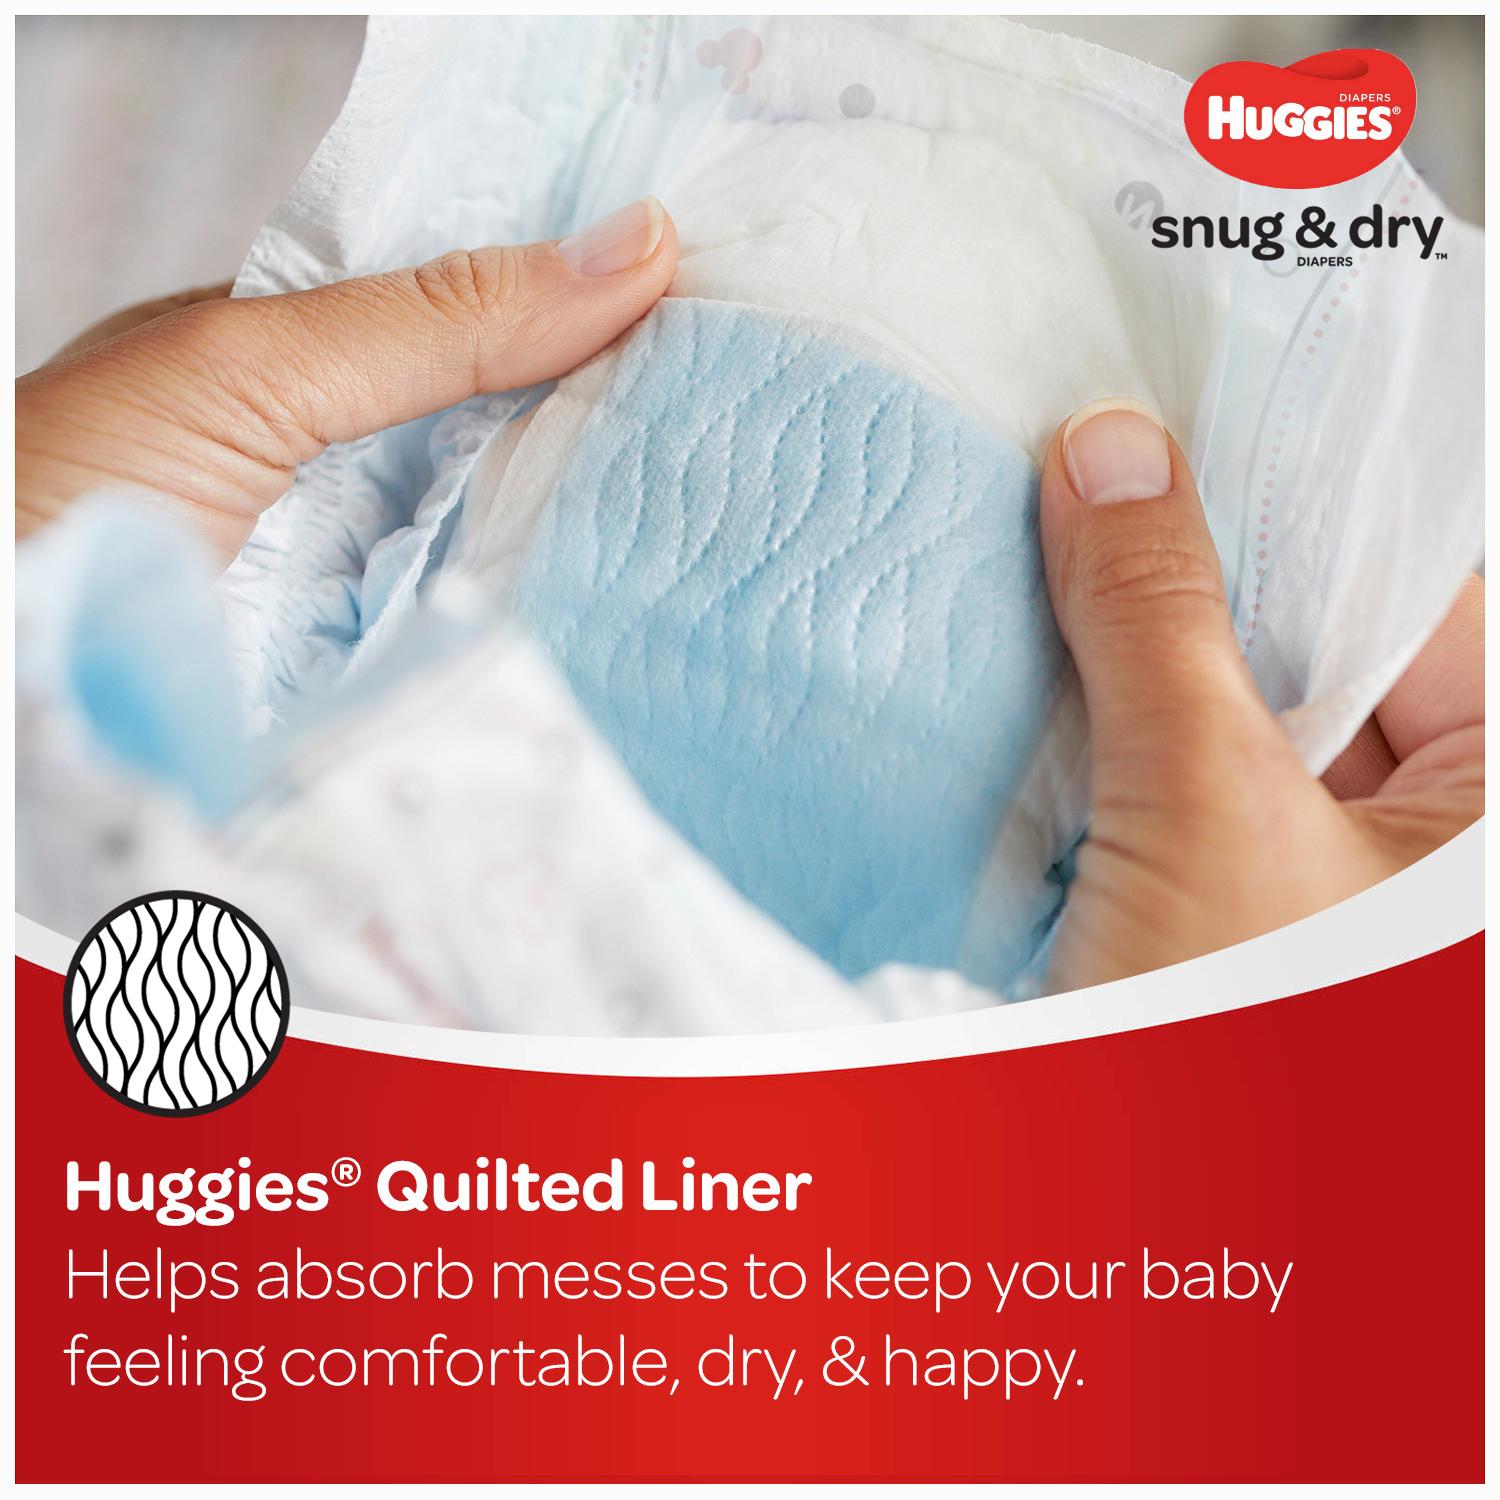 Hugggies Snug & Dry Diapers, Size 6, 128 Count